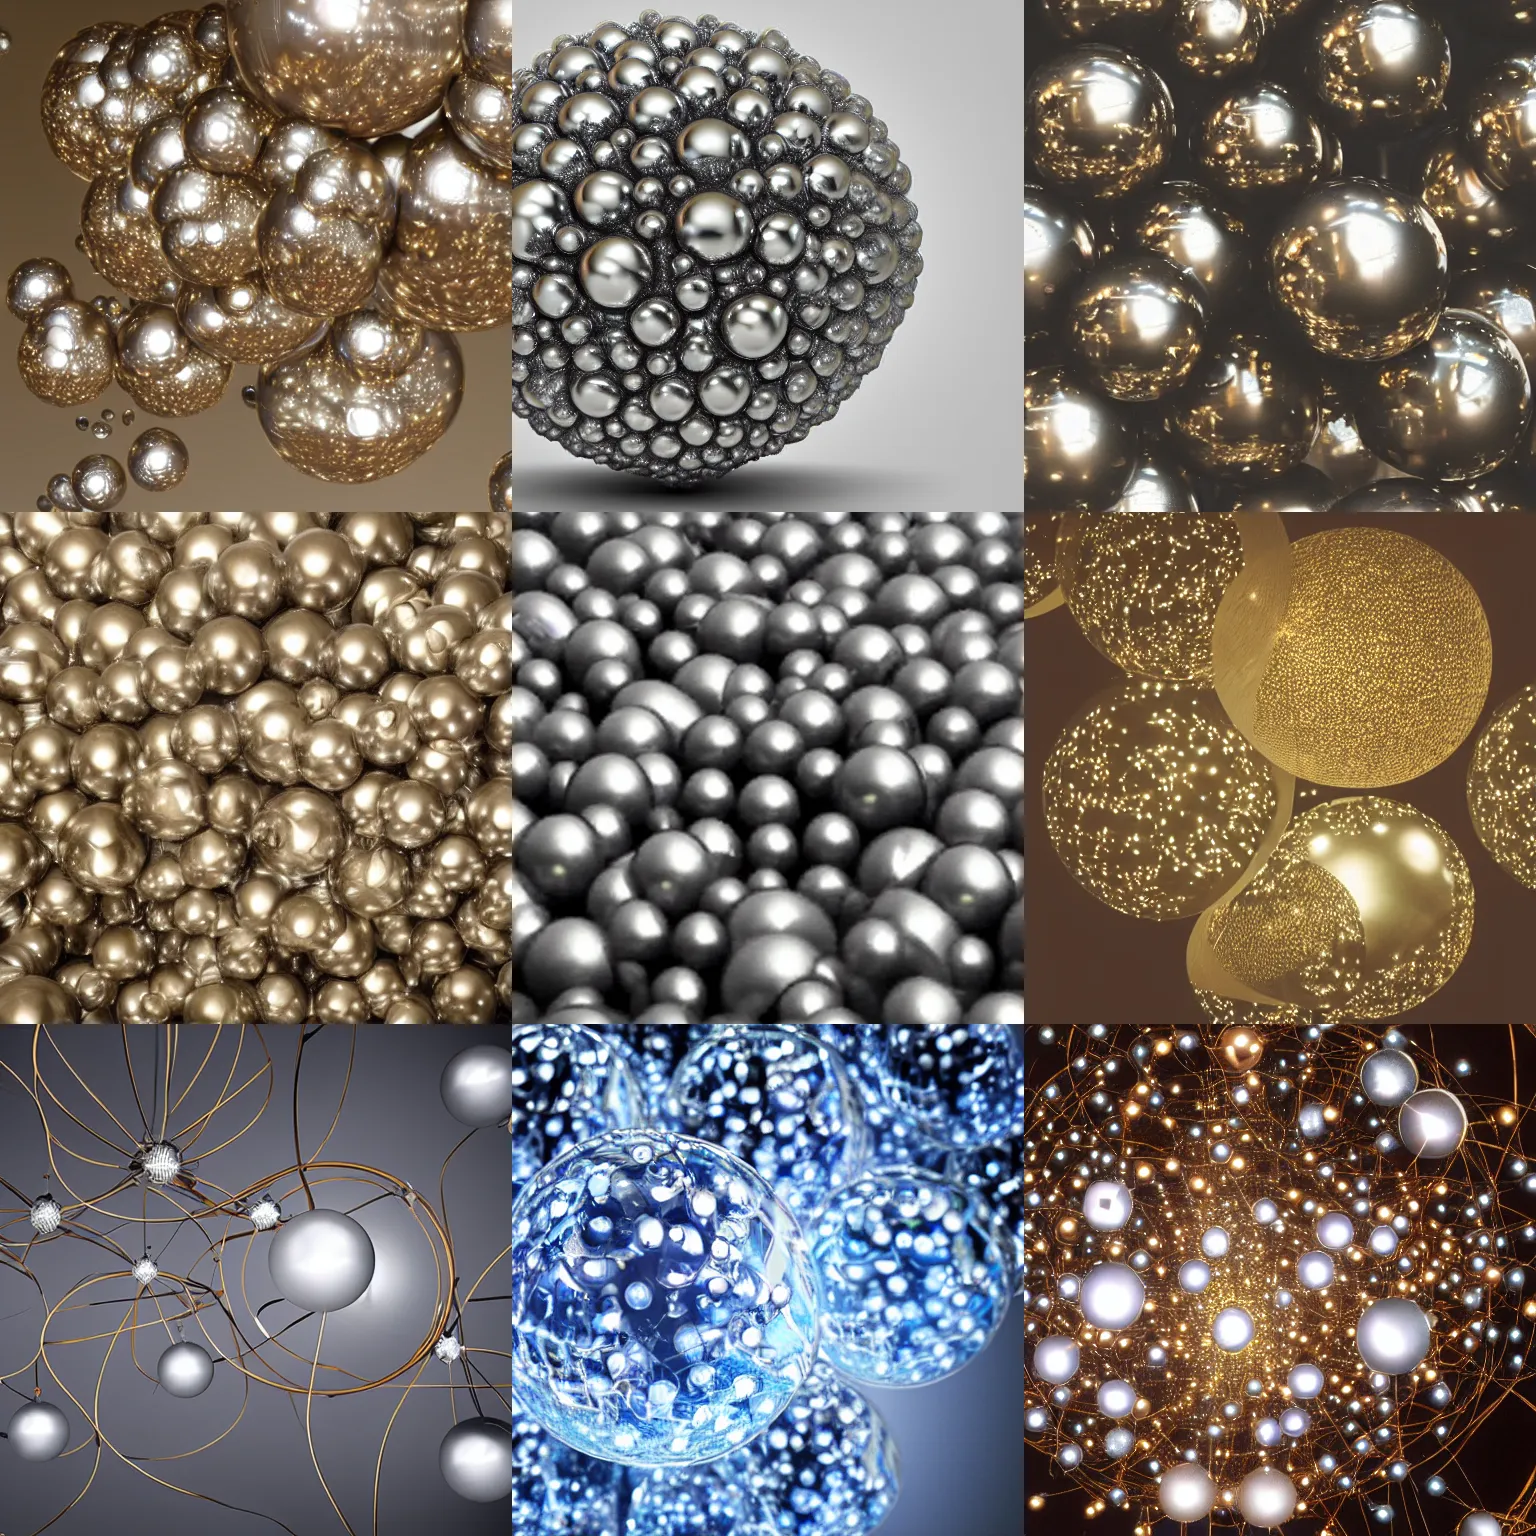 Prompt: cluster of metallic spheres, arcing between spheres